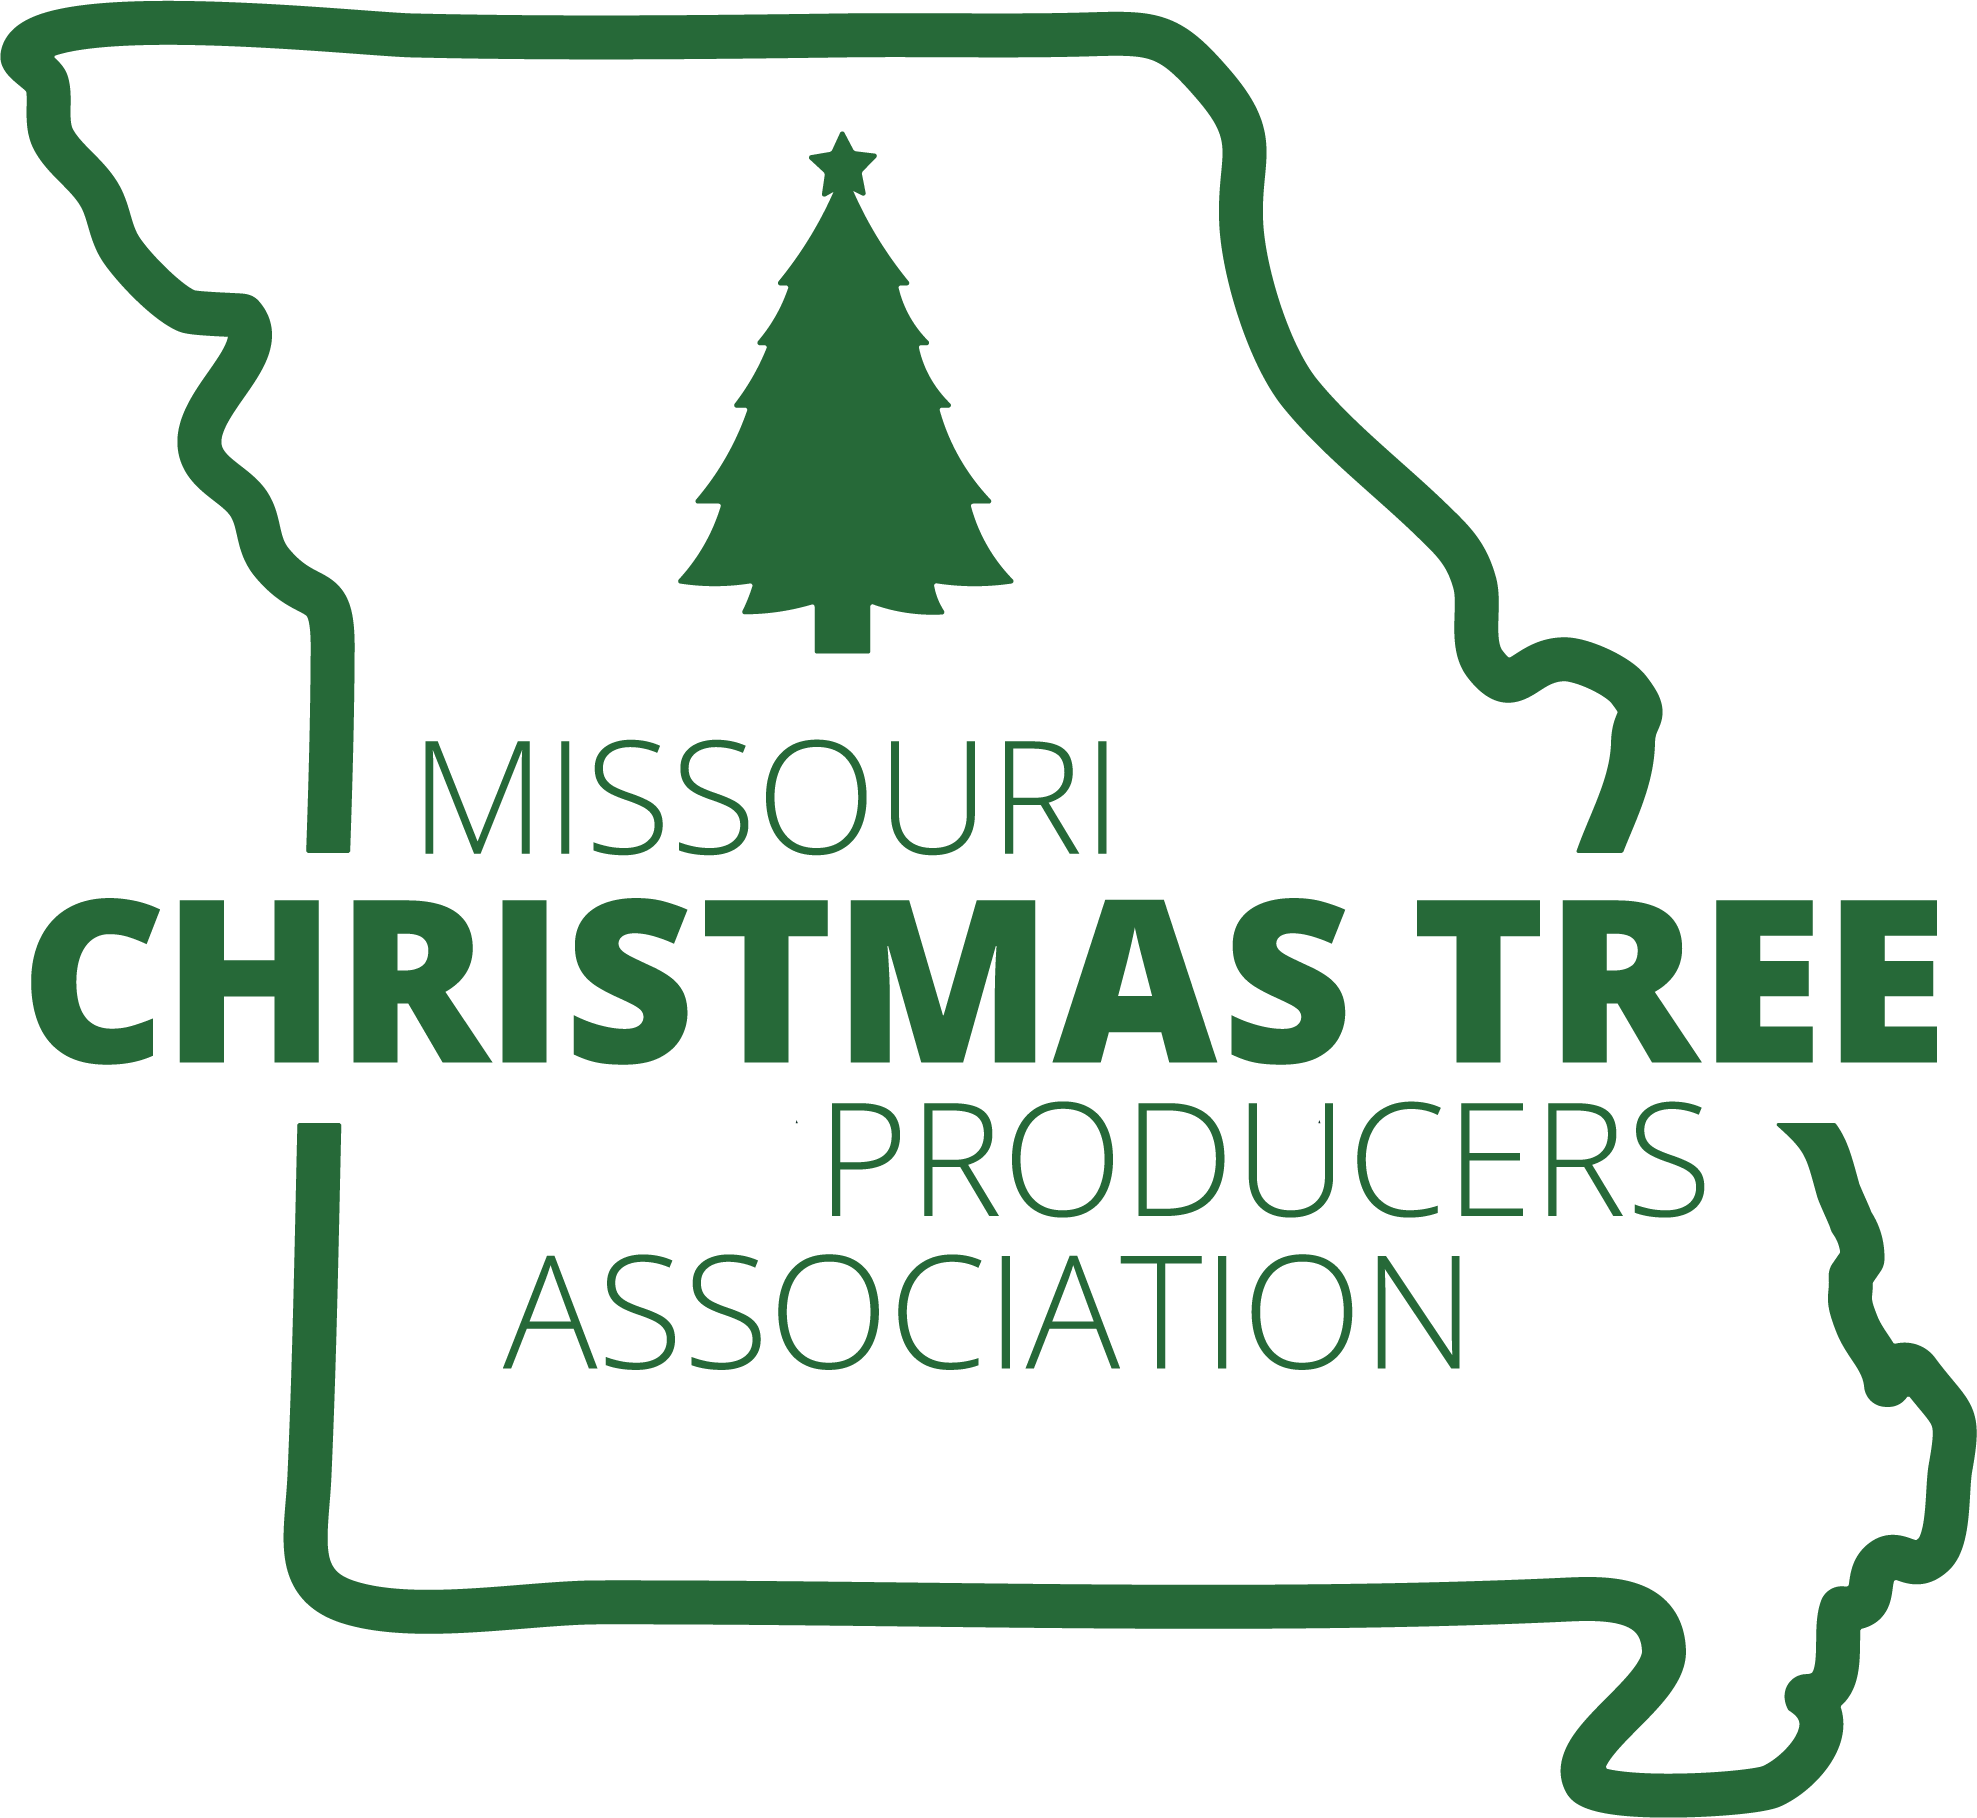 Missouri Christmas Tree Association